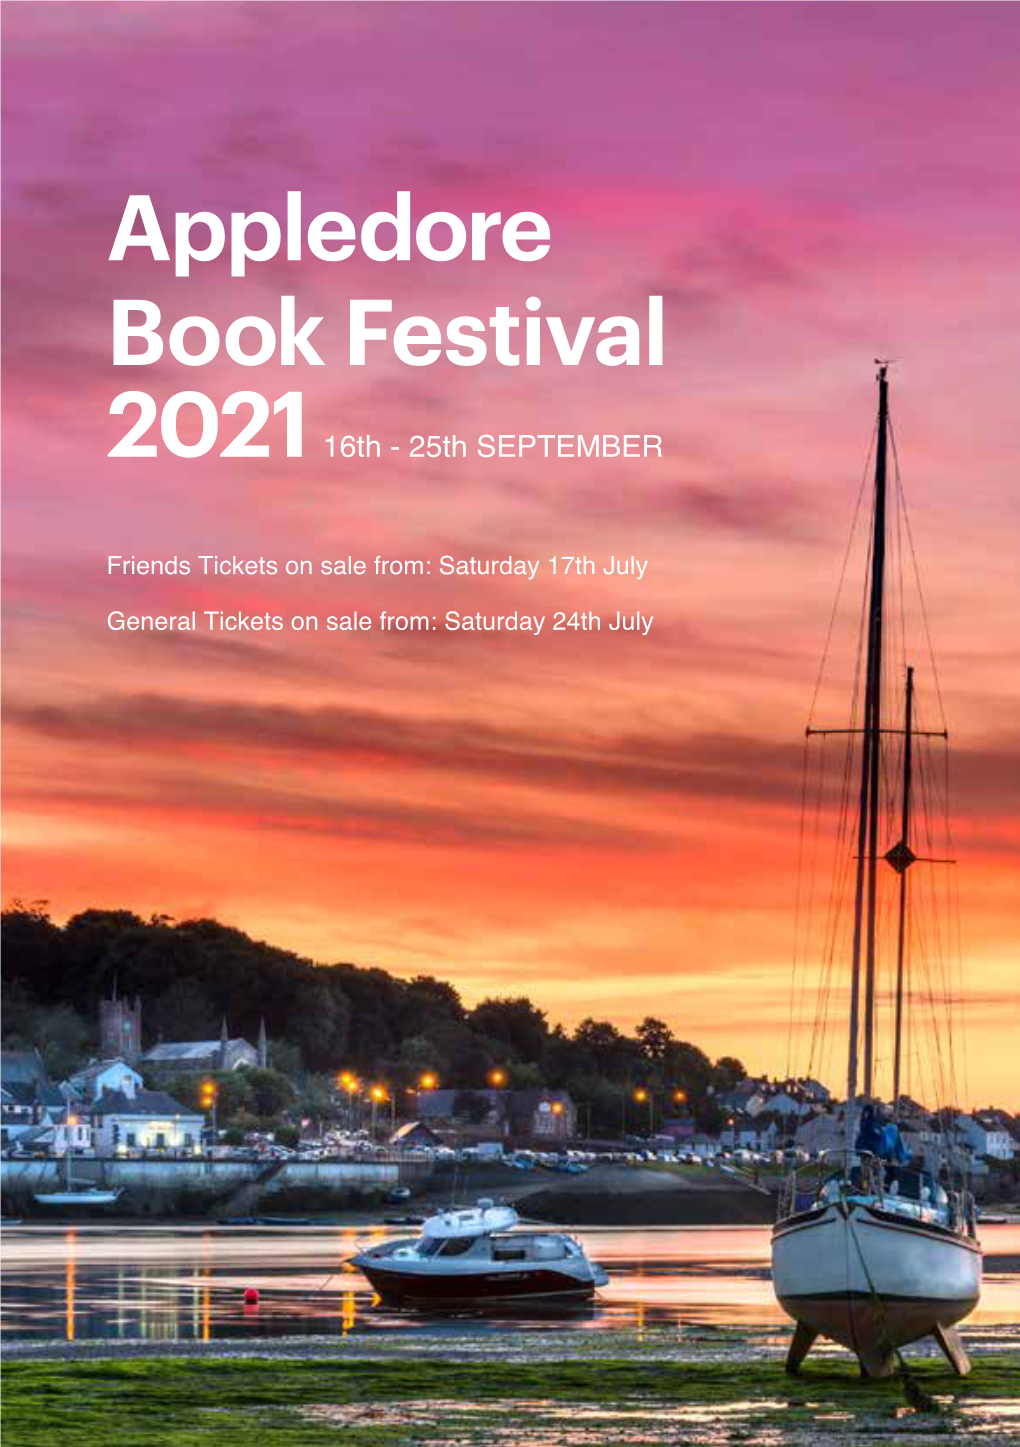 Appledore Book Festival 2021